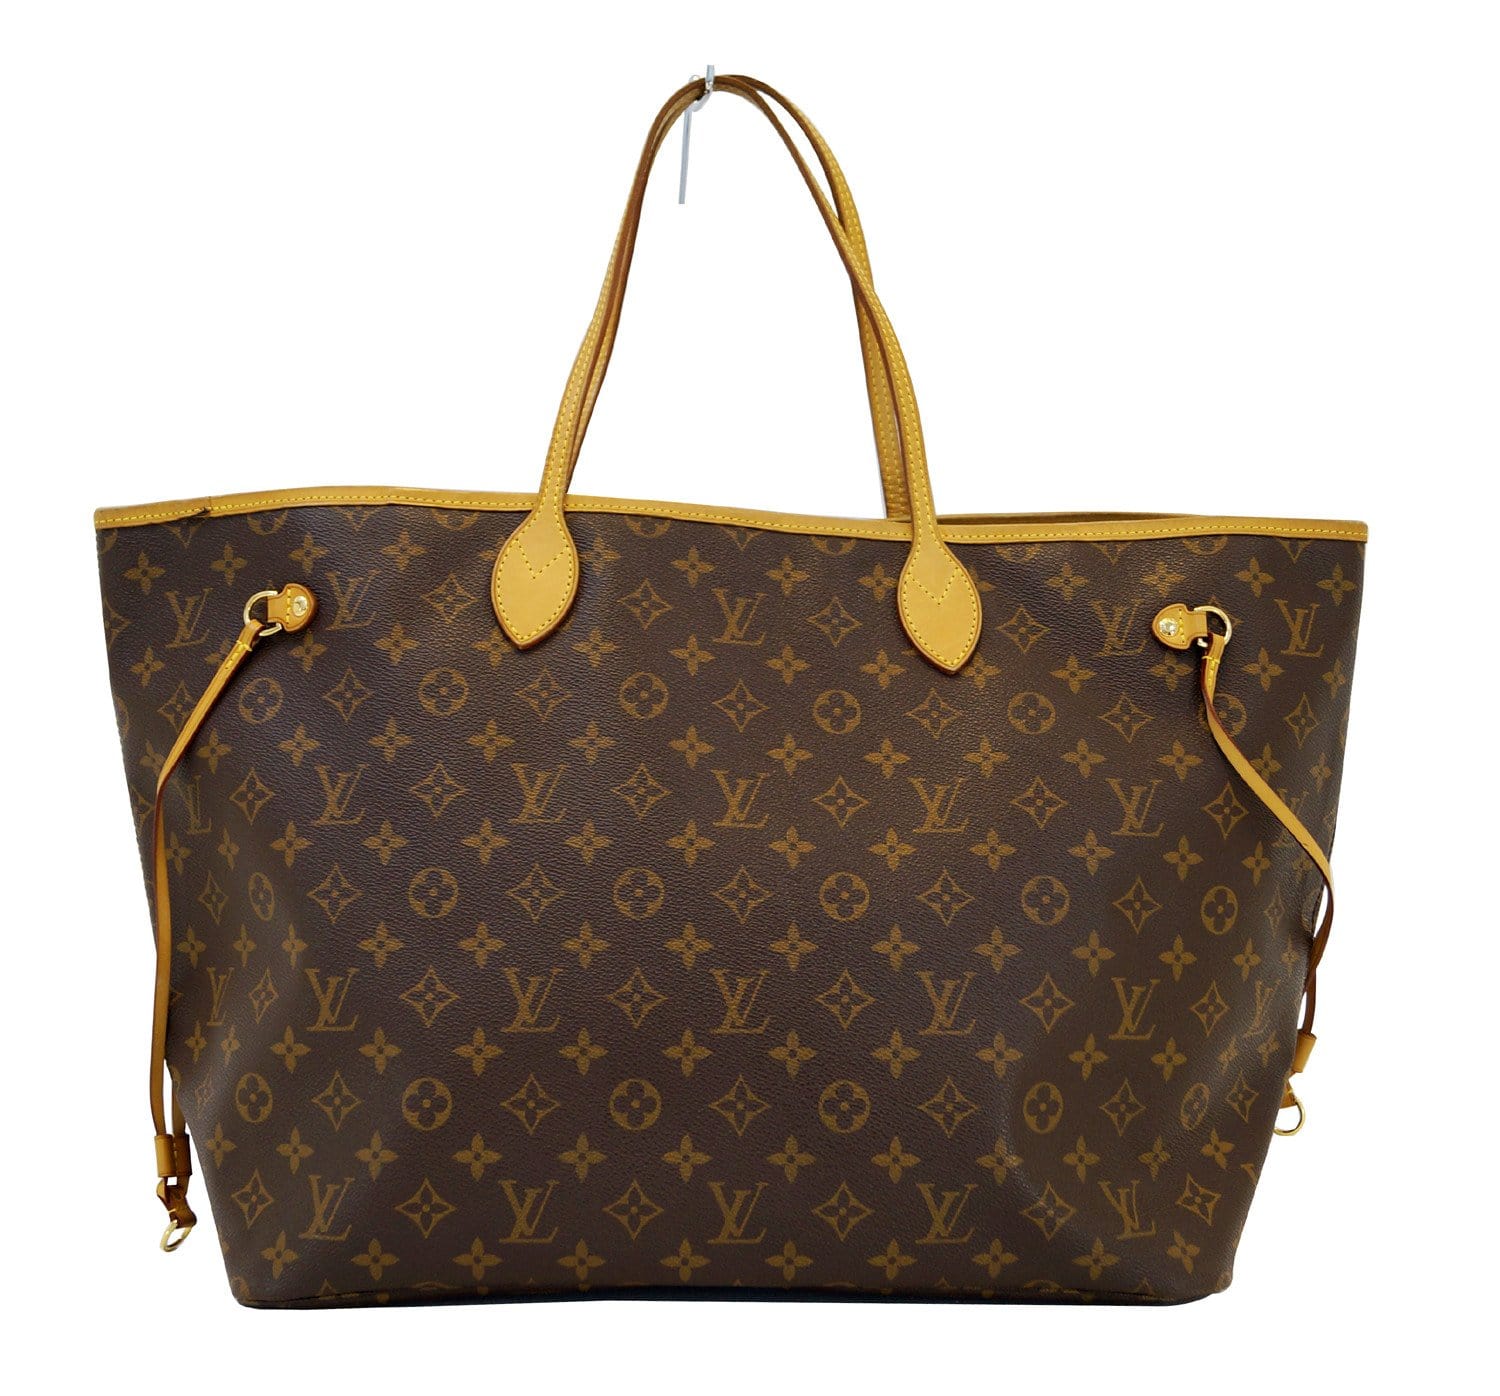 🔴 SOLD 🔴 $725 SHIPPED Pre-owned Authentic Louis Vuitton Speedy 30  Monogram Handbag/ Shoulder Bag Serial/ Date Code - VI0922 Beautiful…